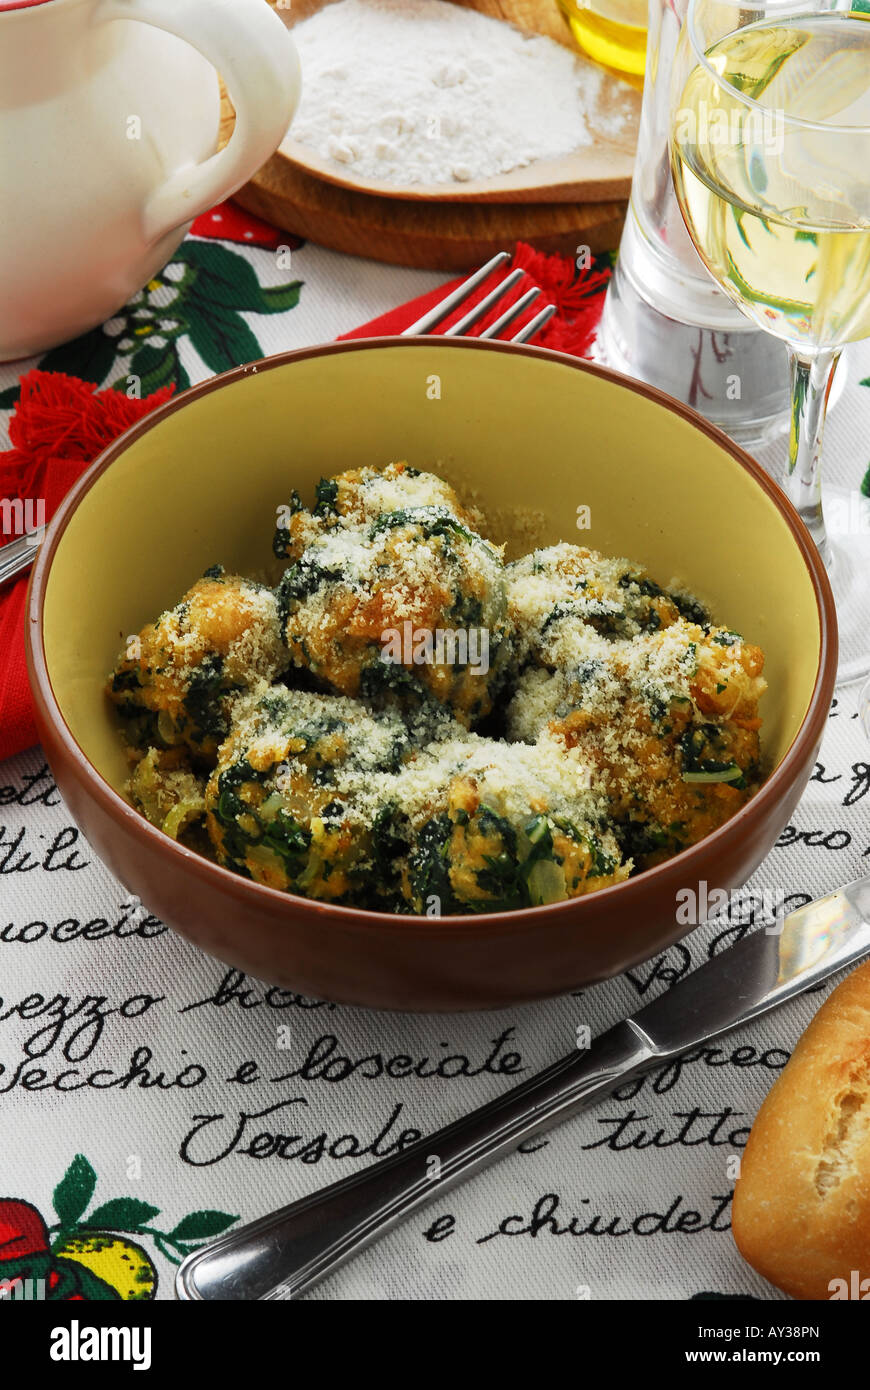 Knodels with spinachs - Trentino Alto Adige - Italian kitchen Stock Photo